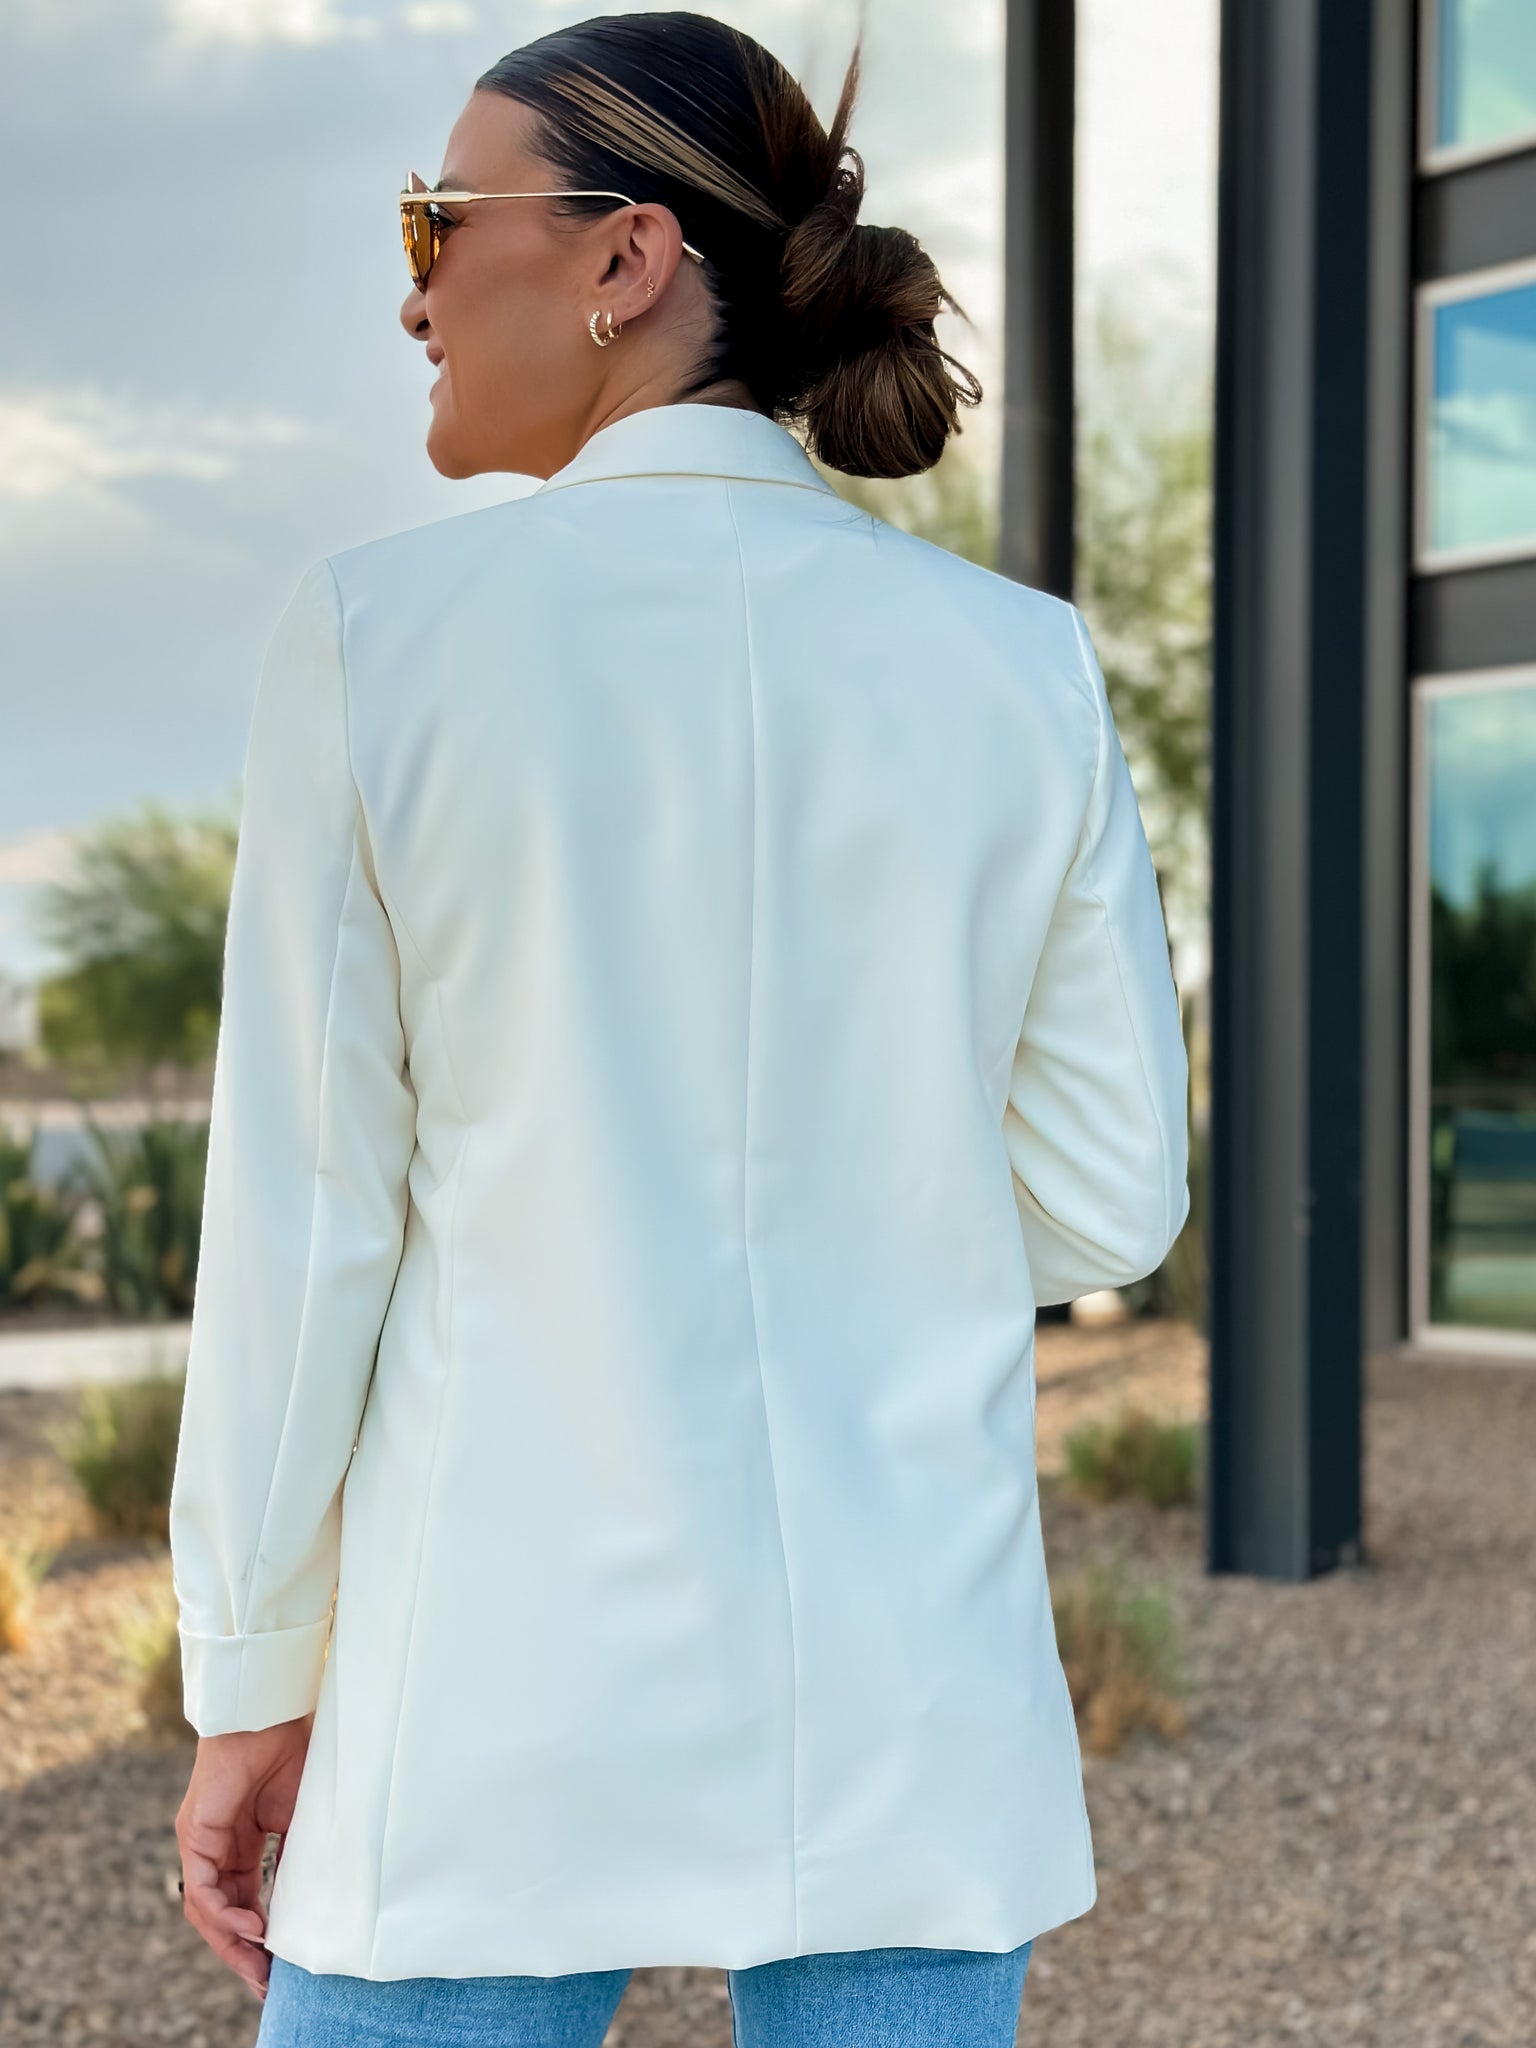 white ivory slim fit womens blazer for office work